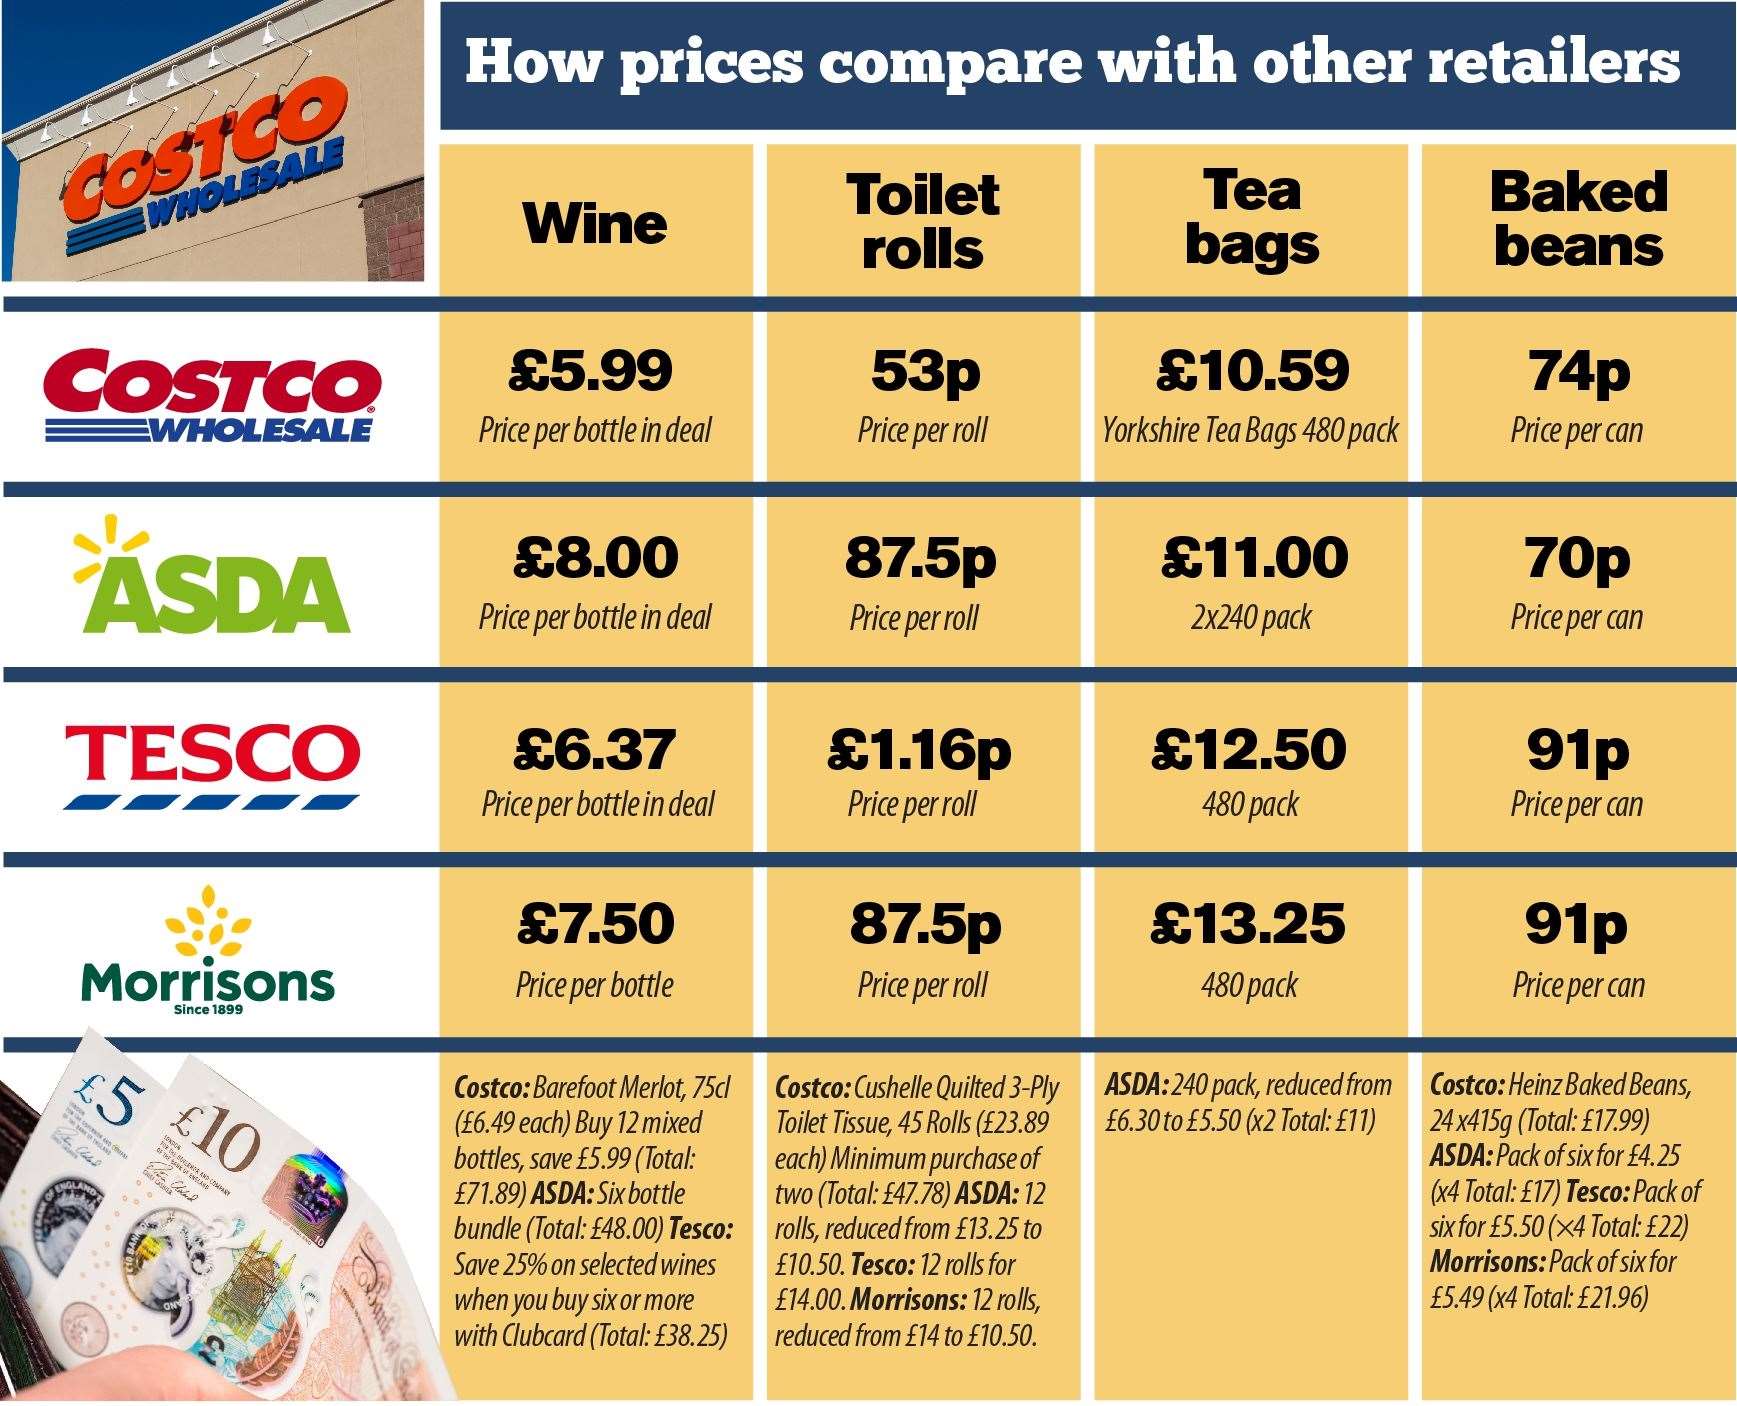 Costco price comparison against ASDA, Tesco and Morrisons